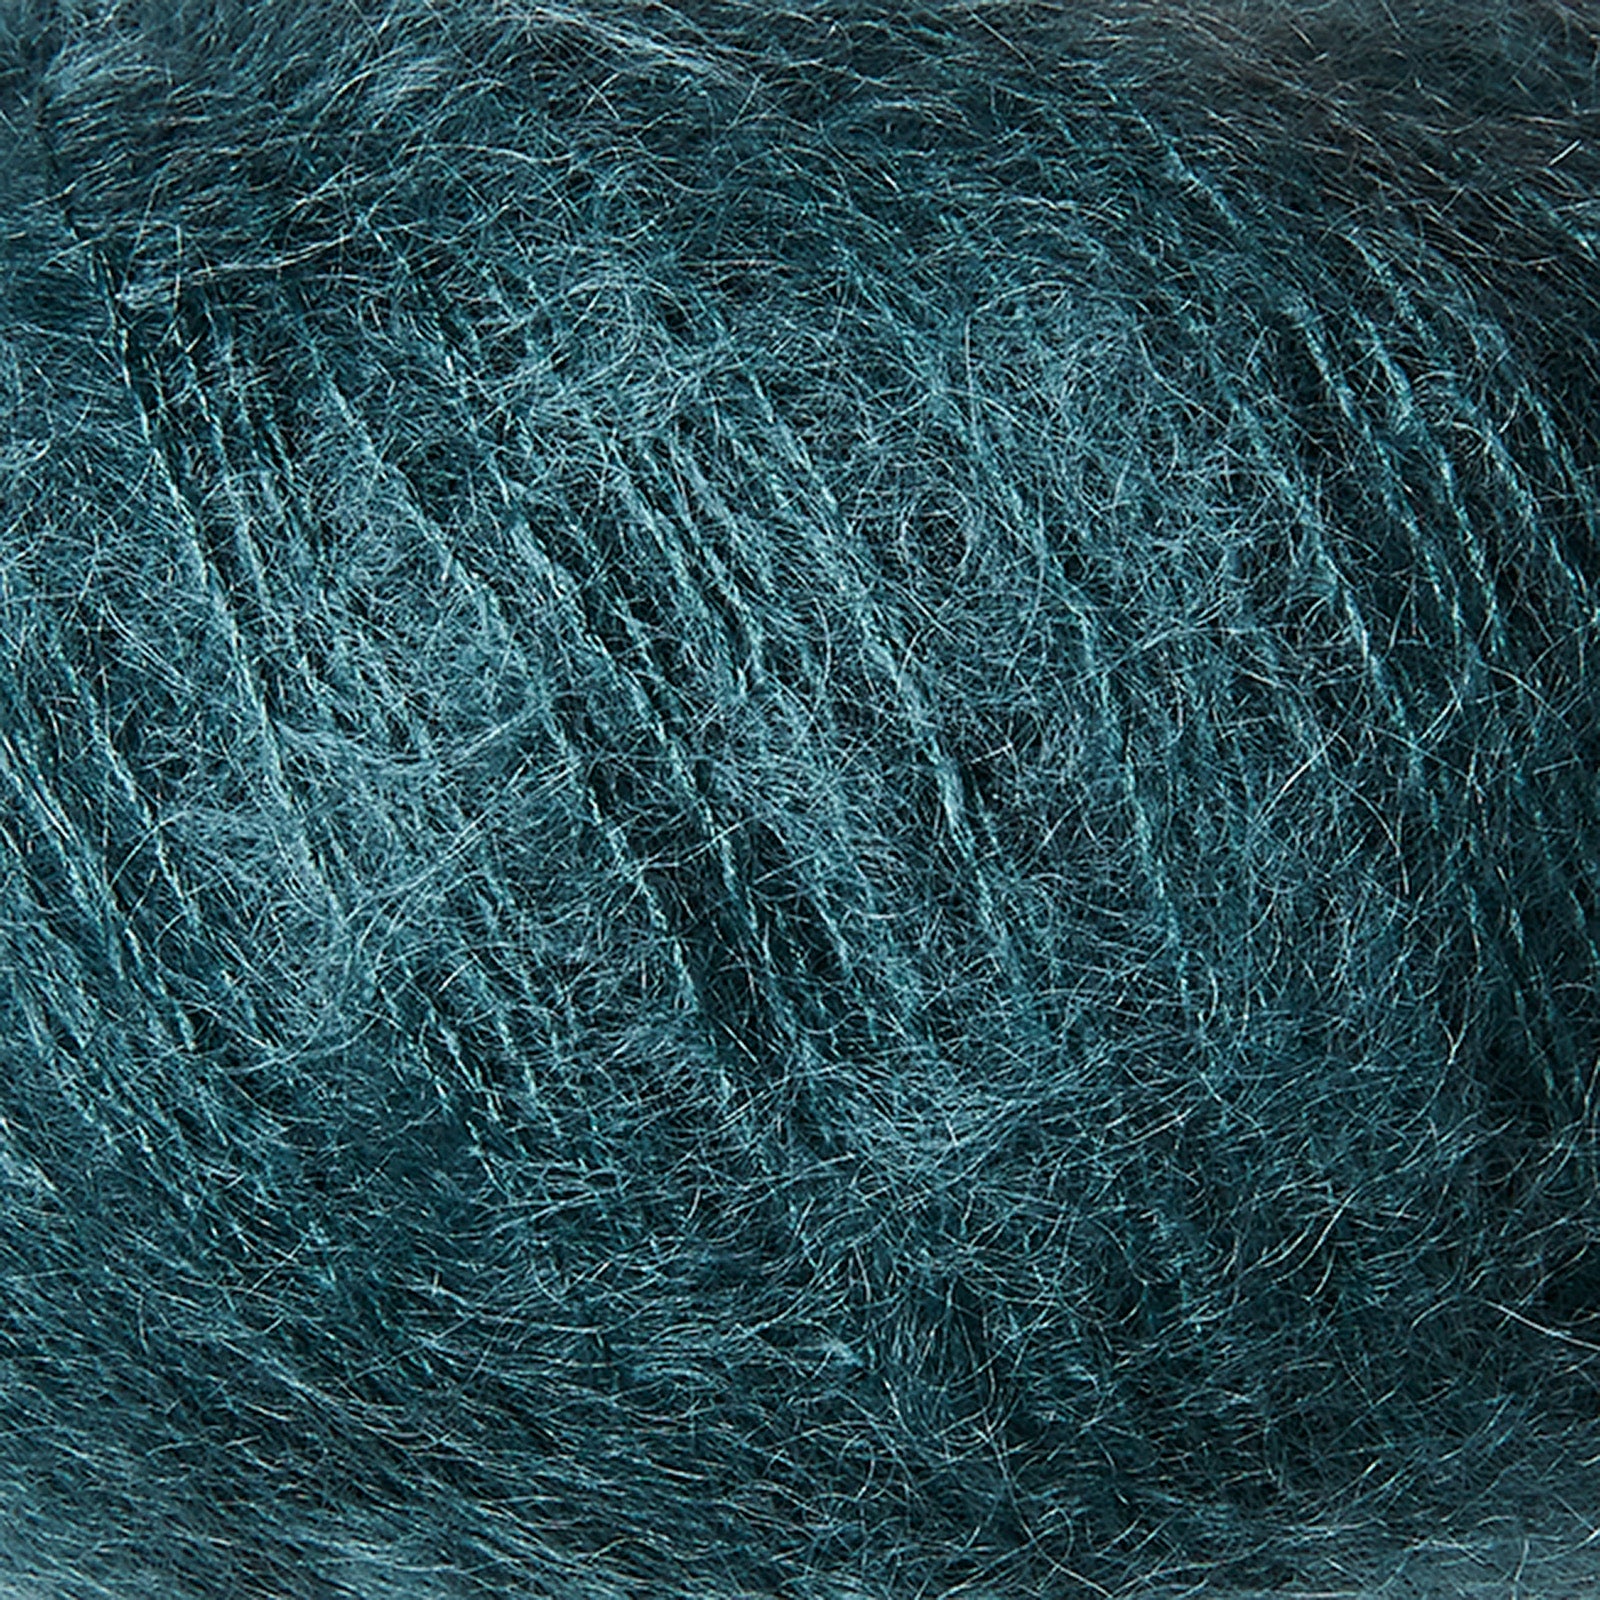 Knitting for Olive Soft Silk Mohair - Petroleum Green